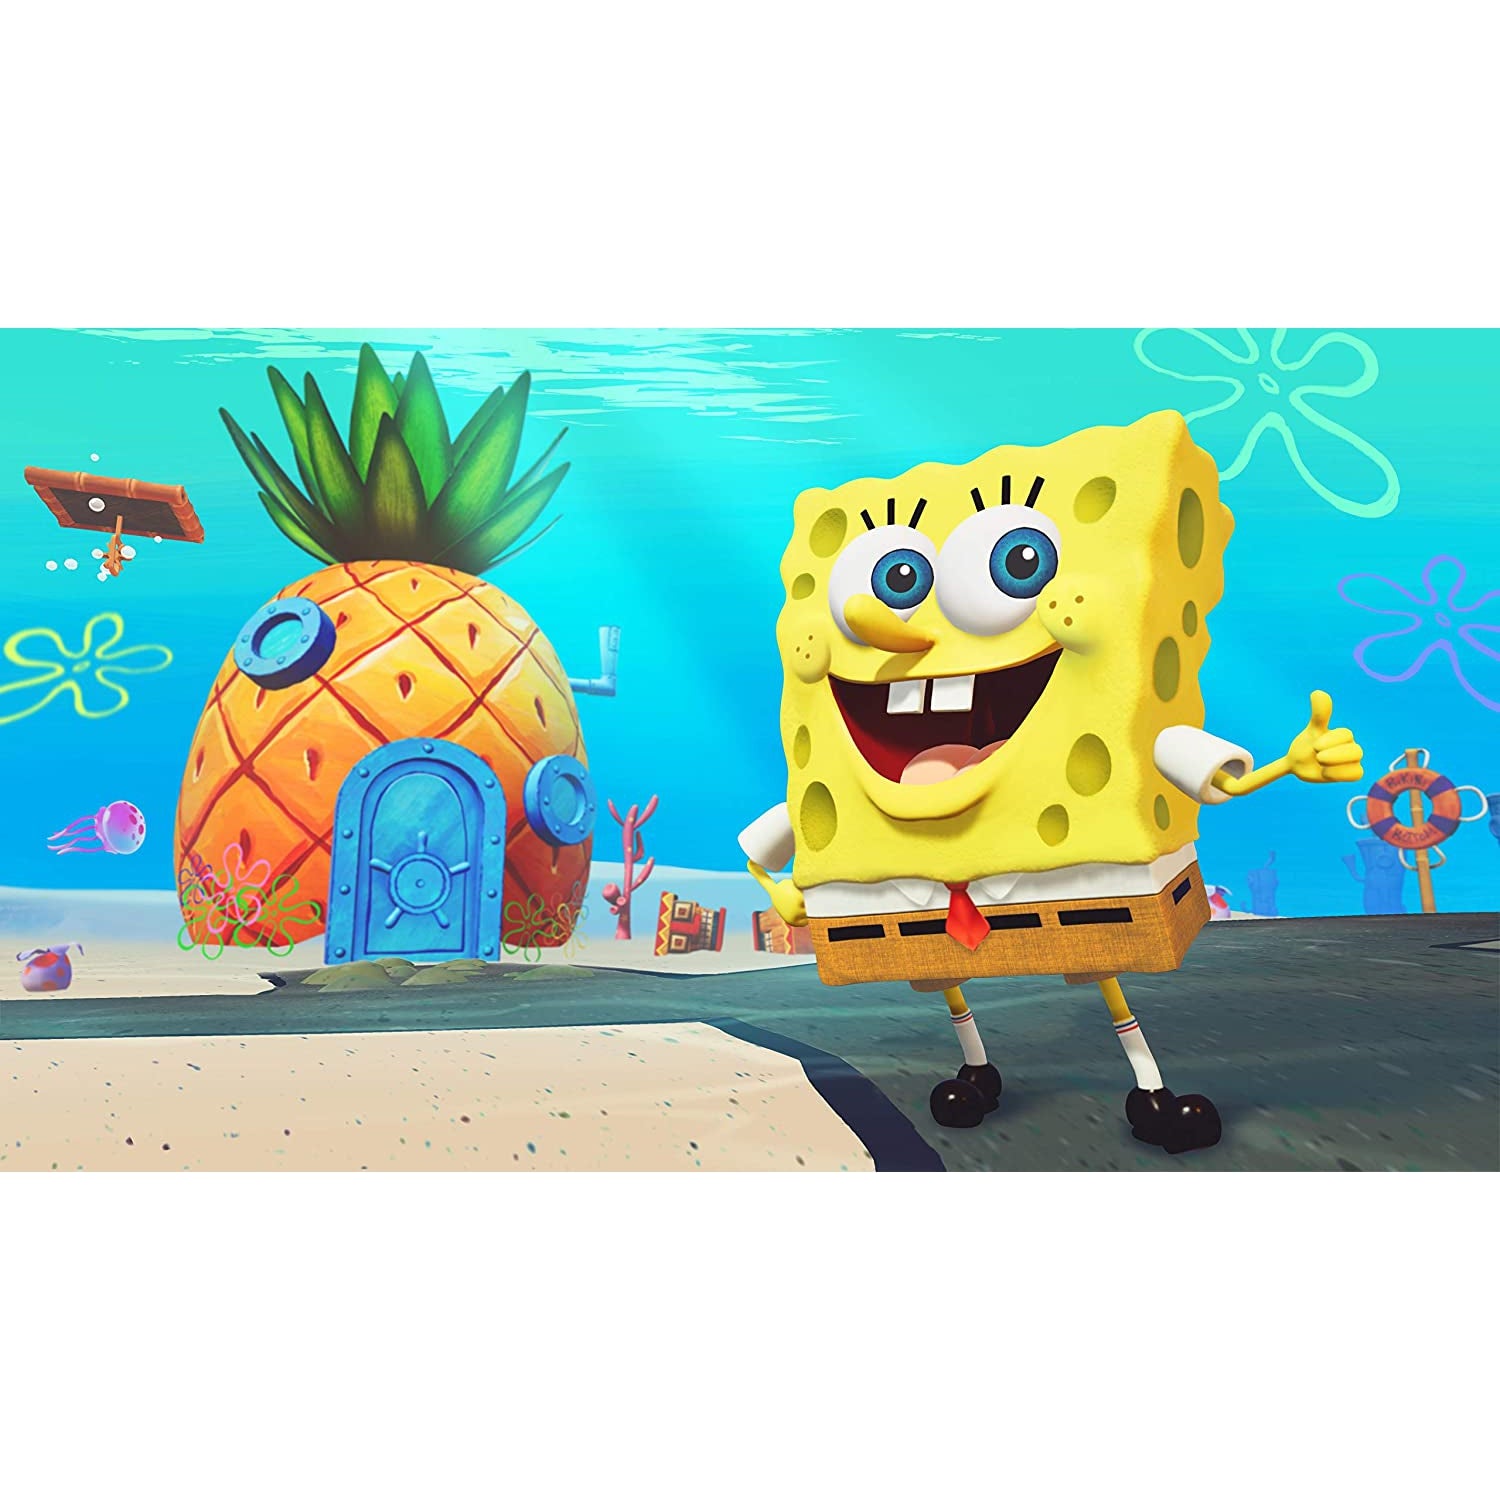 Spongebob SquarePants: Battle for Bikini Bottom Rehydrated (Xbox One)